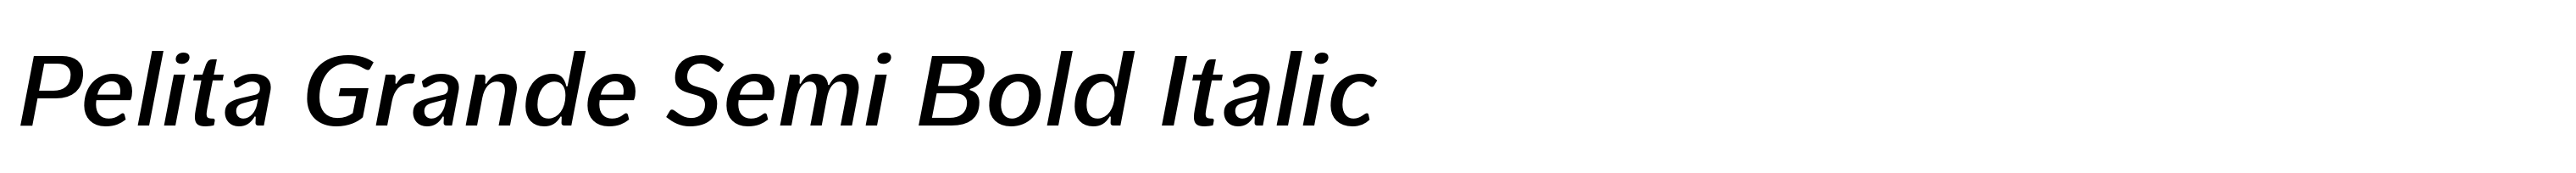 Pelita Grande Semi Bold Italic